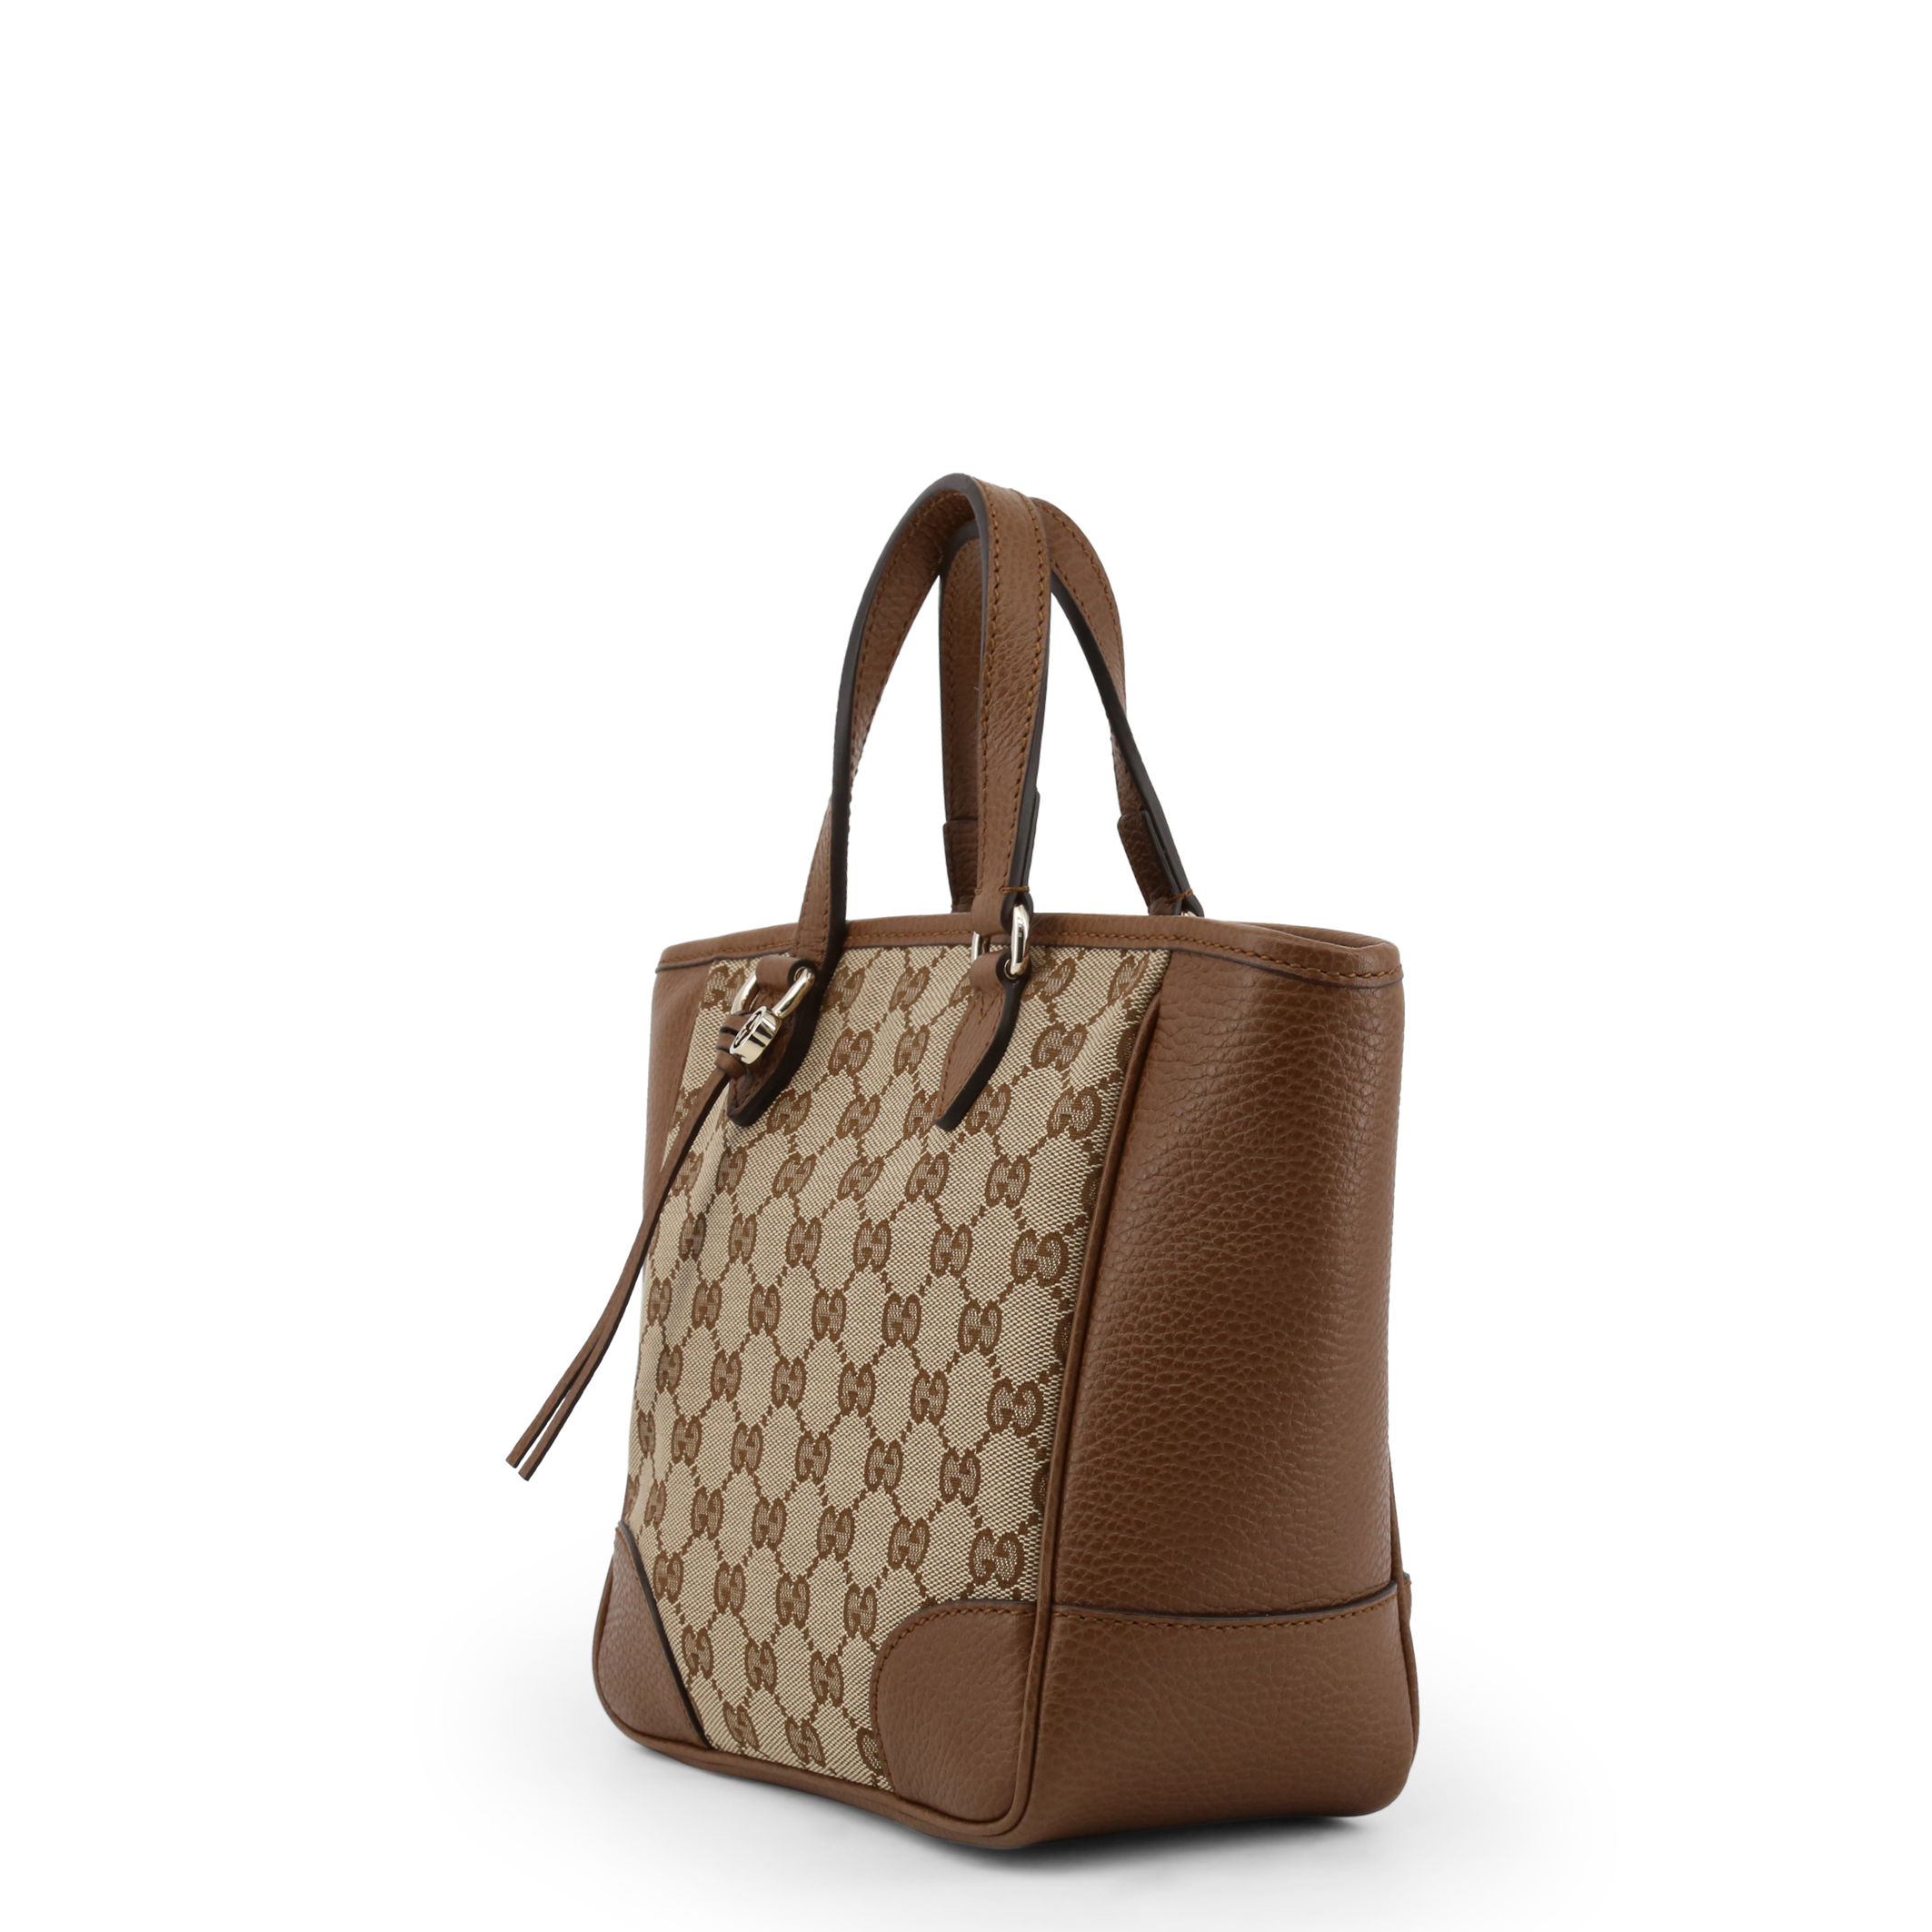 Gucci Womens Handbags NOSIZE | eBay